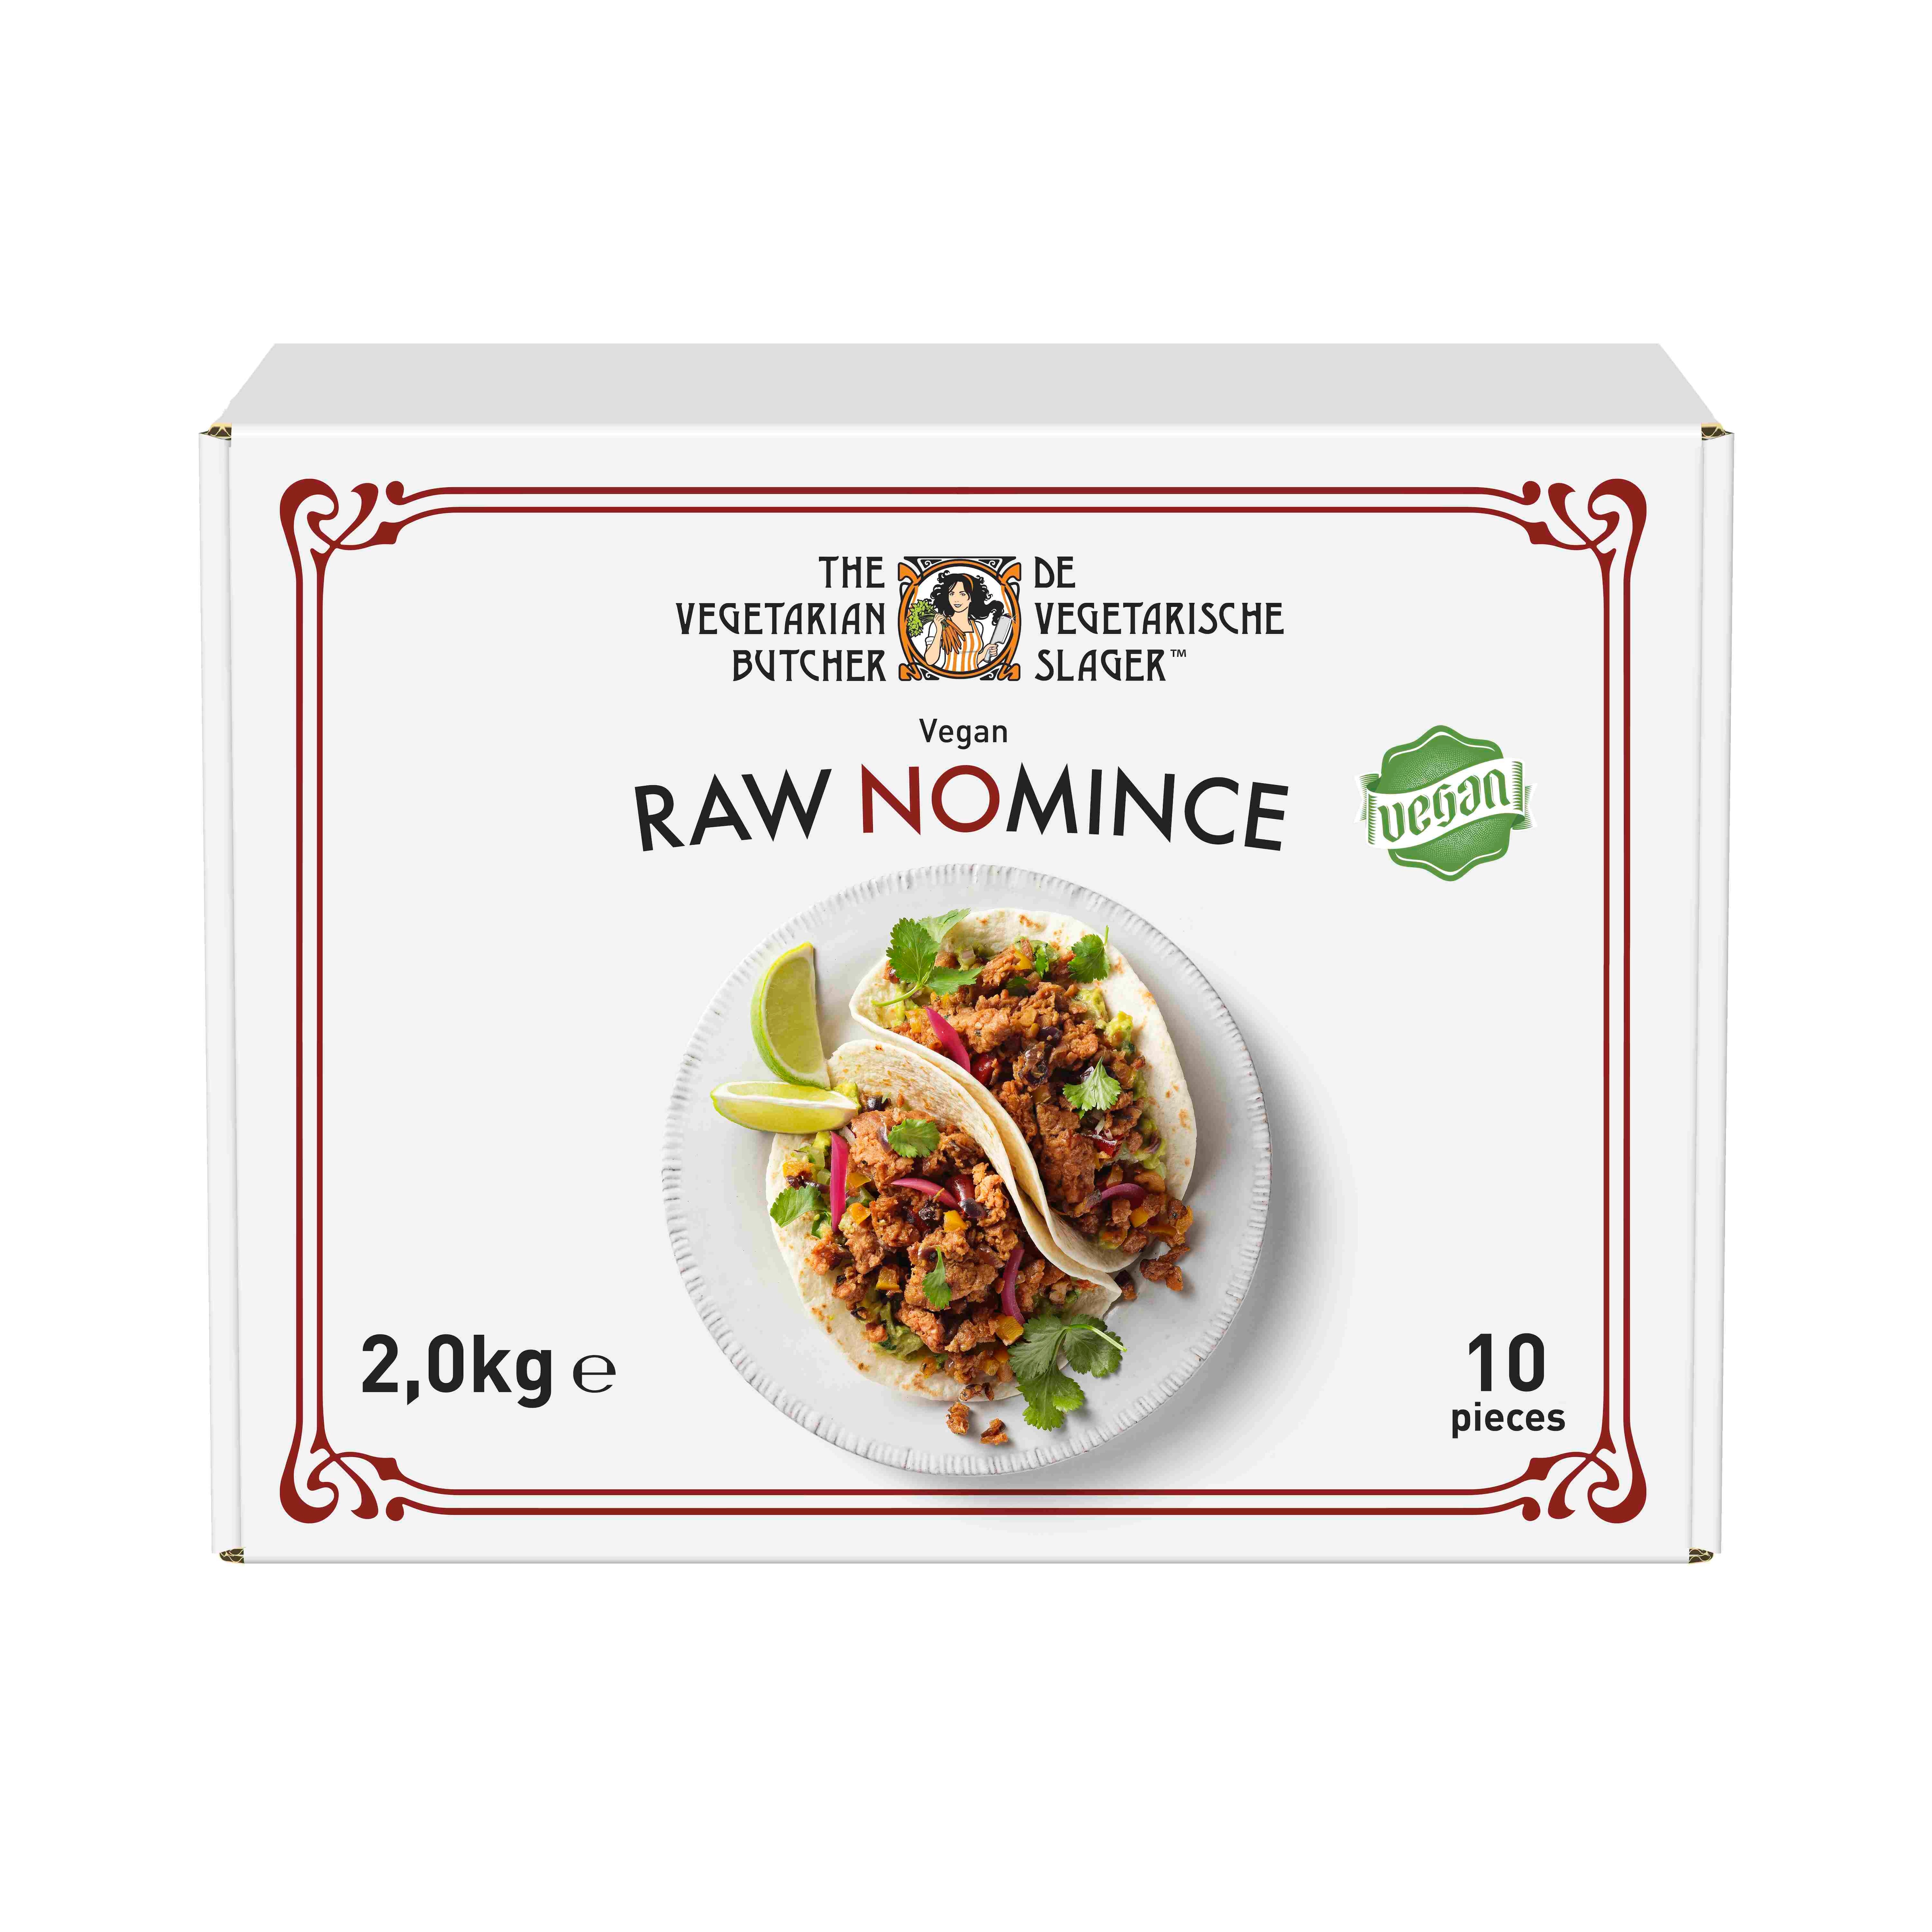 The Vegetarian Butcher Raw NoMince 2 kg - Προϊόντα φυτικής προέλευσης με γεύση, μαγείρεμα, υφή και αίσθηση σαν το κρέας.